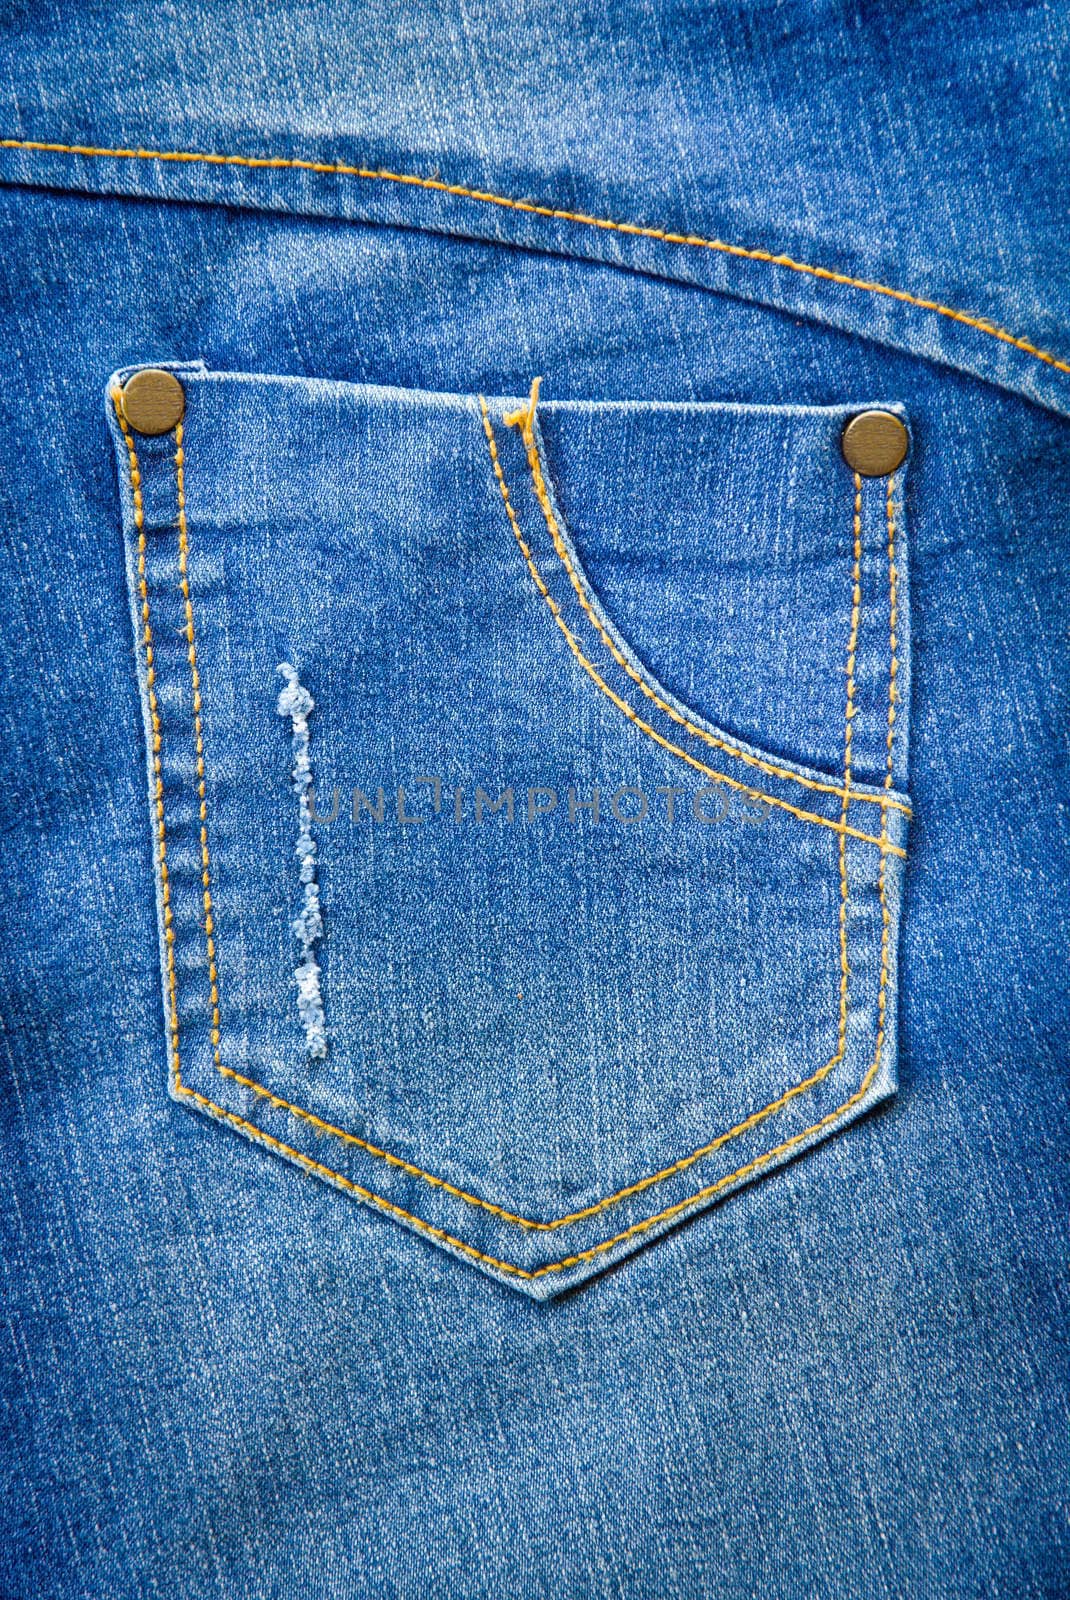 Blue jeans pocket. by Gamjai